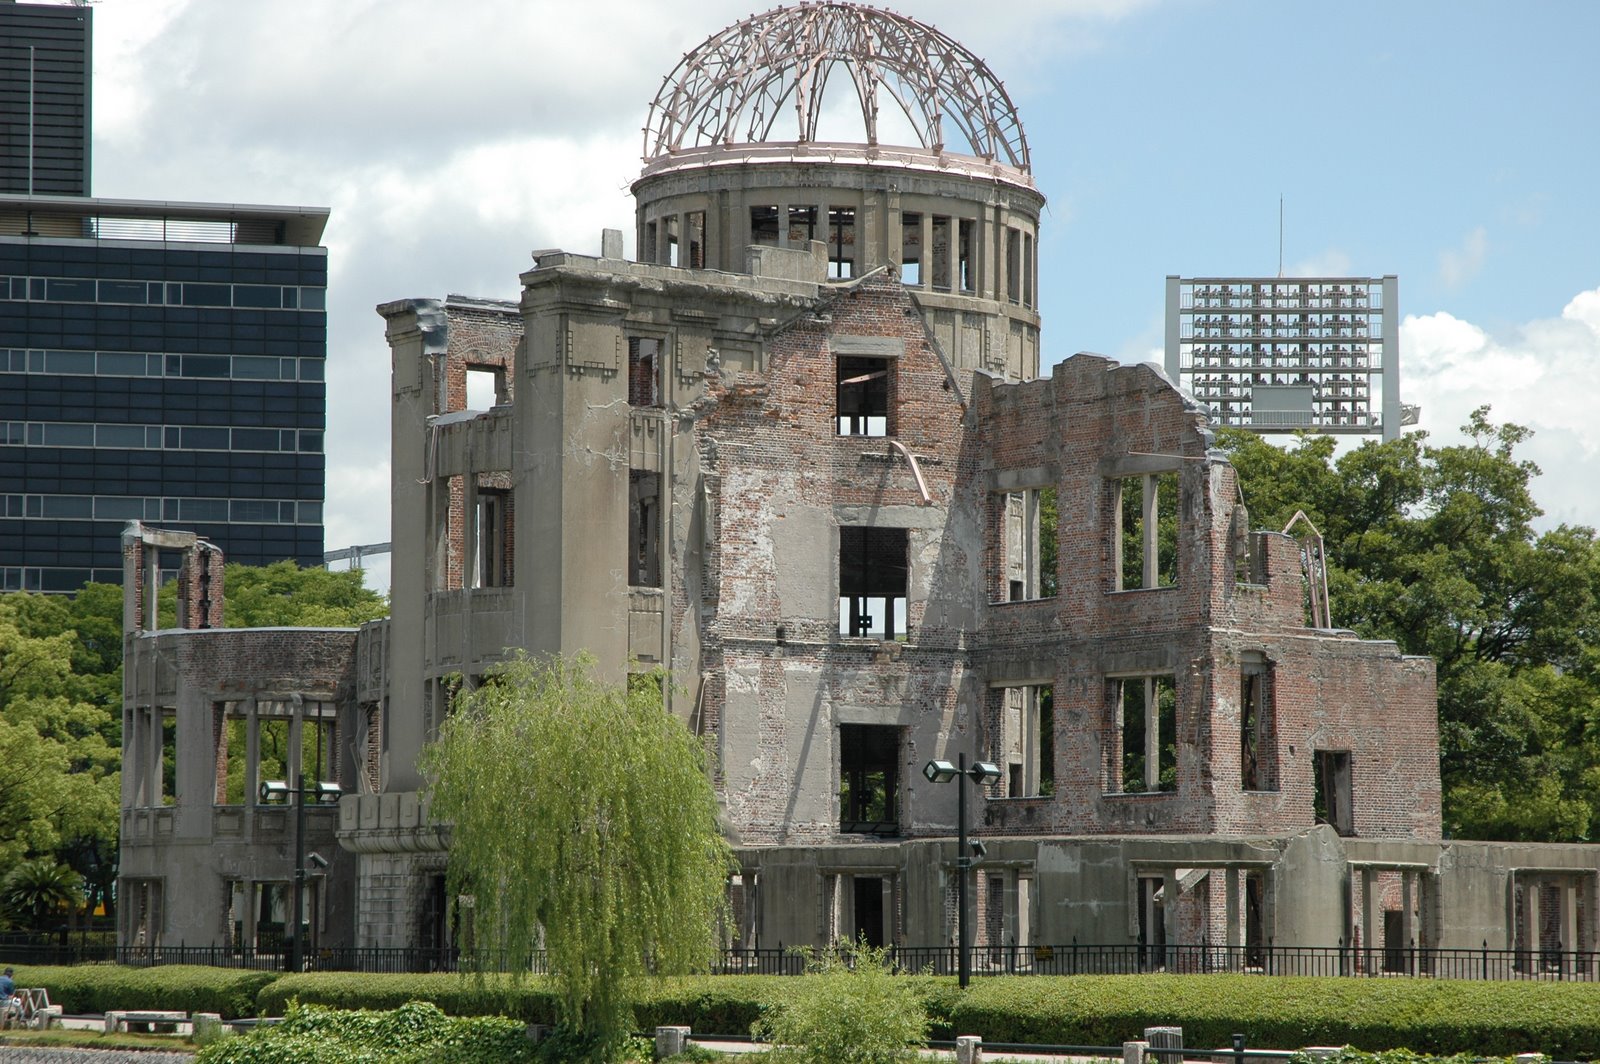 Hiroshima Atomic Dome Memorial. Photo by Dmitrij Rodionov, Wikimedia Commons.